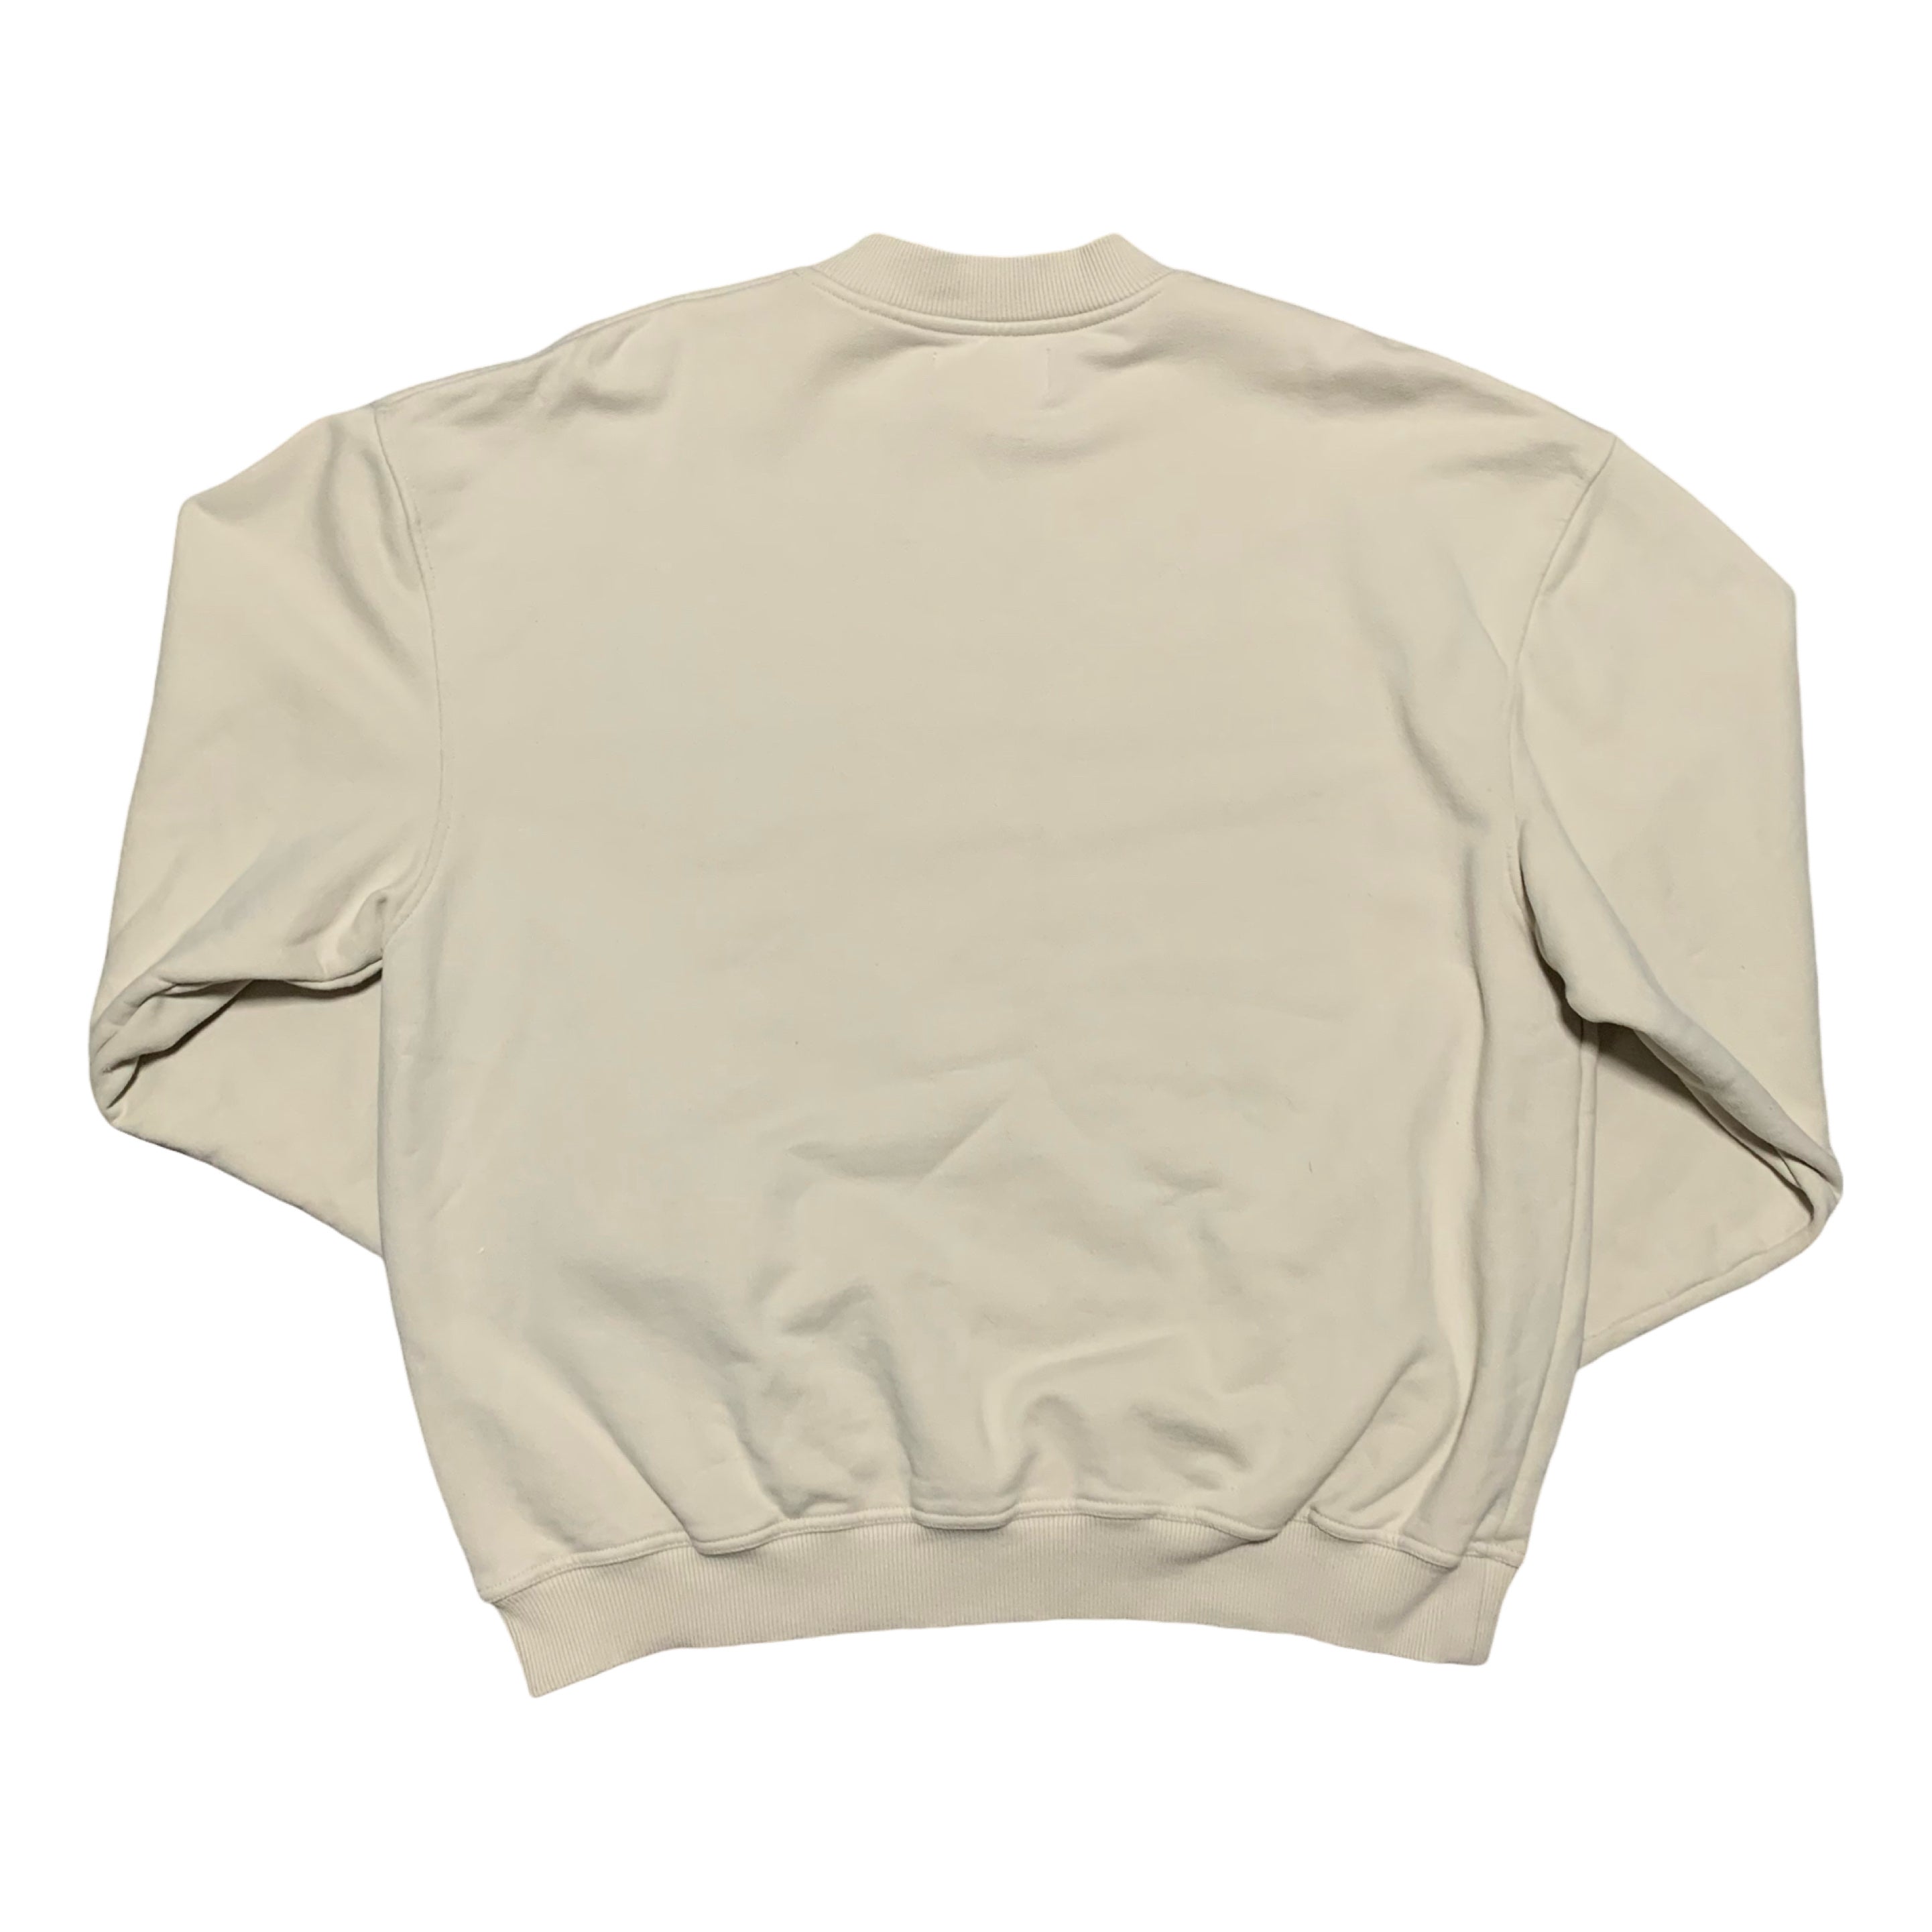 Represent Medium Blanks Vintage White Sweater Sweatshirt Crewneck